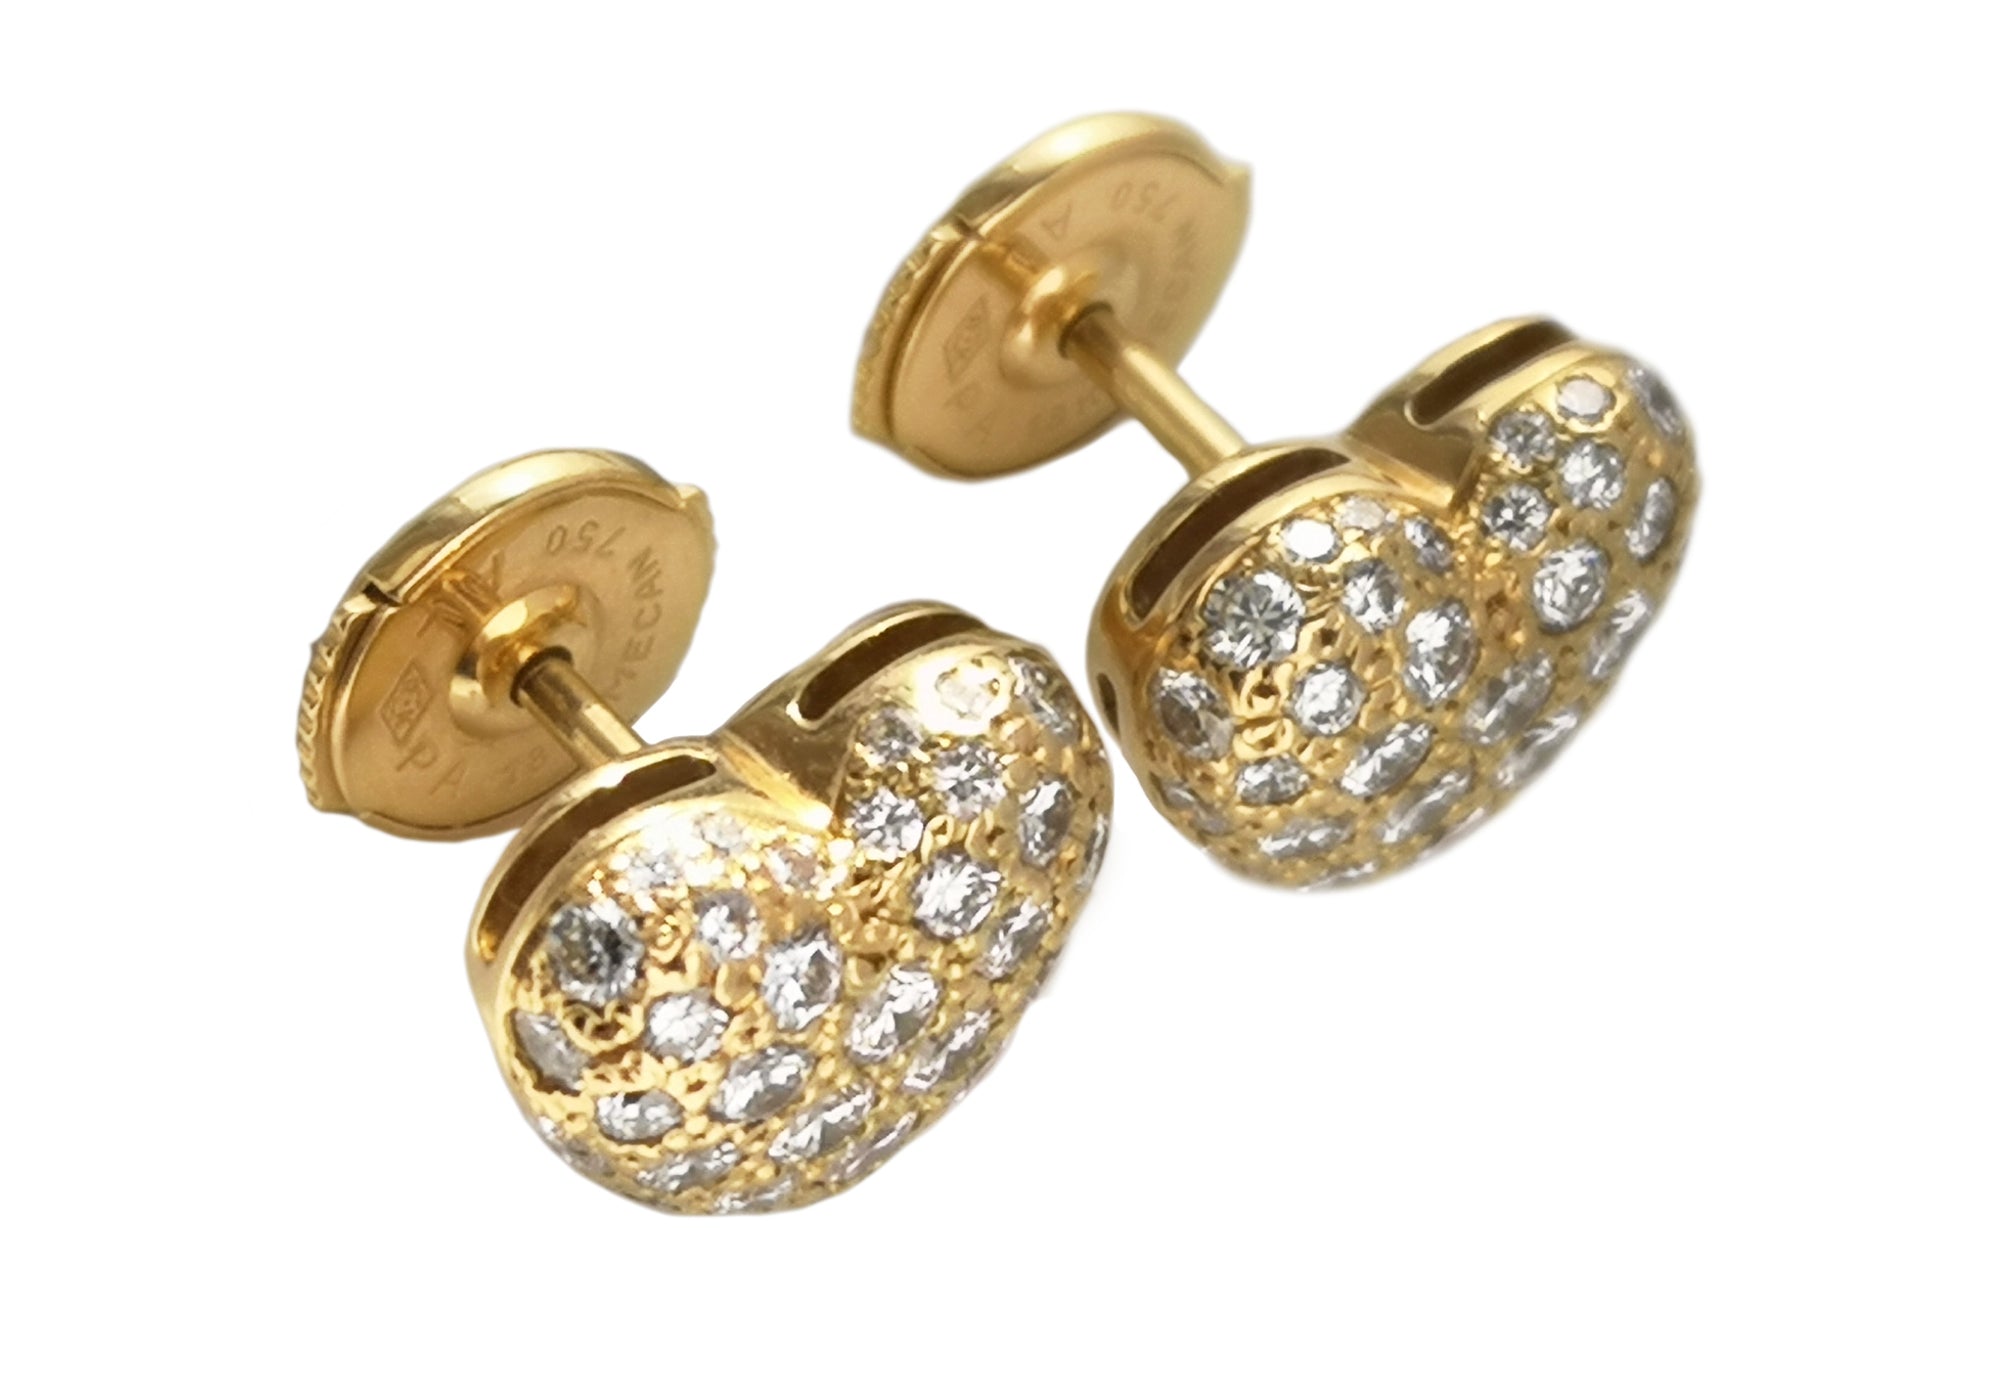 Cartier 1.00ct Pave Diamond Heart Earrings